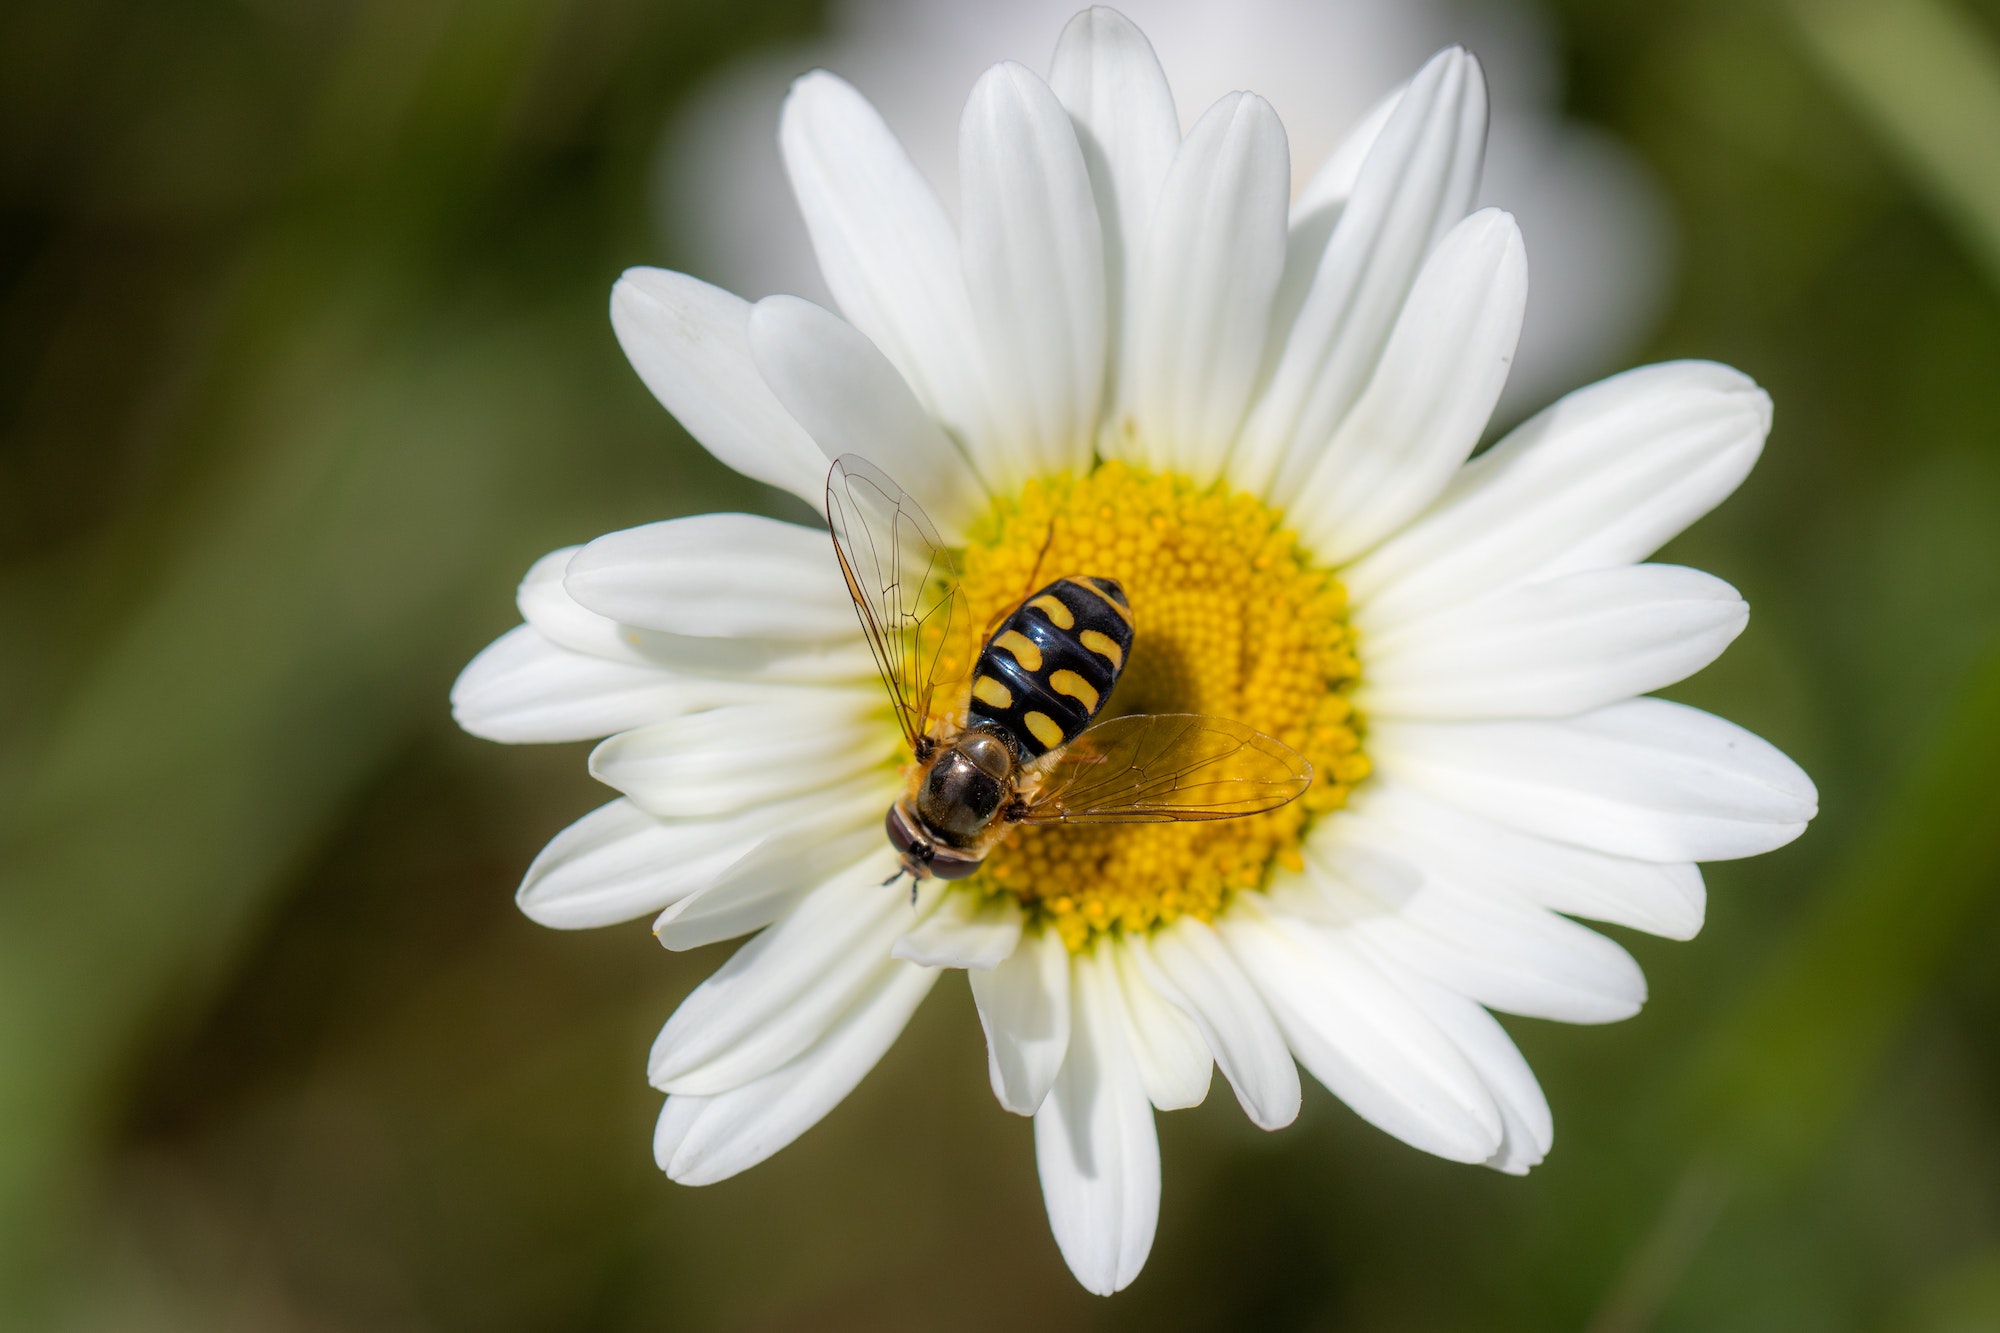 a honeybee pollinating a daisy flower